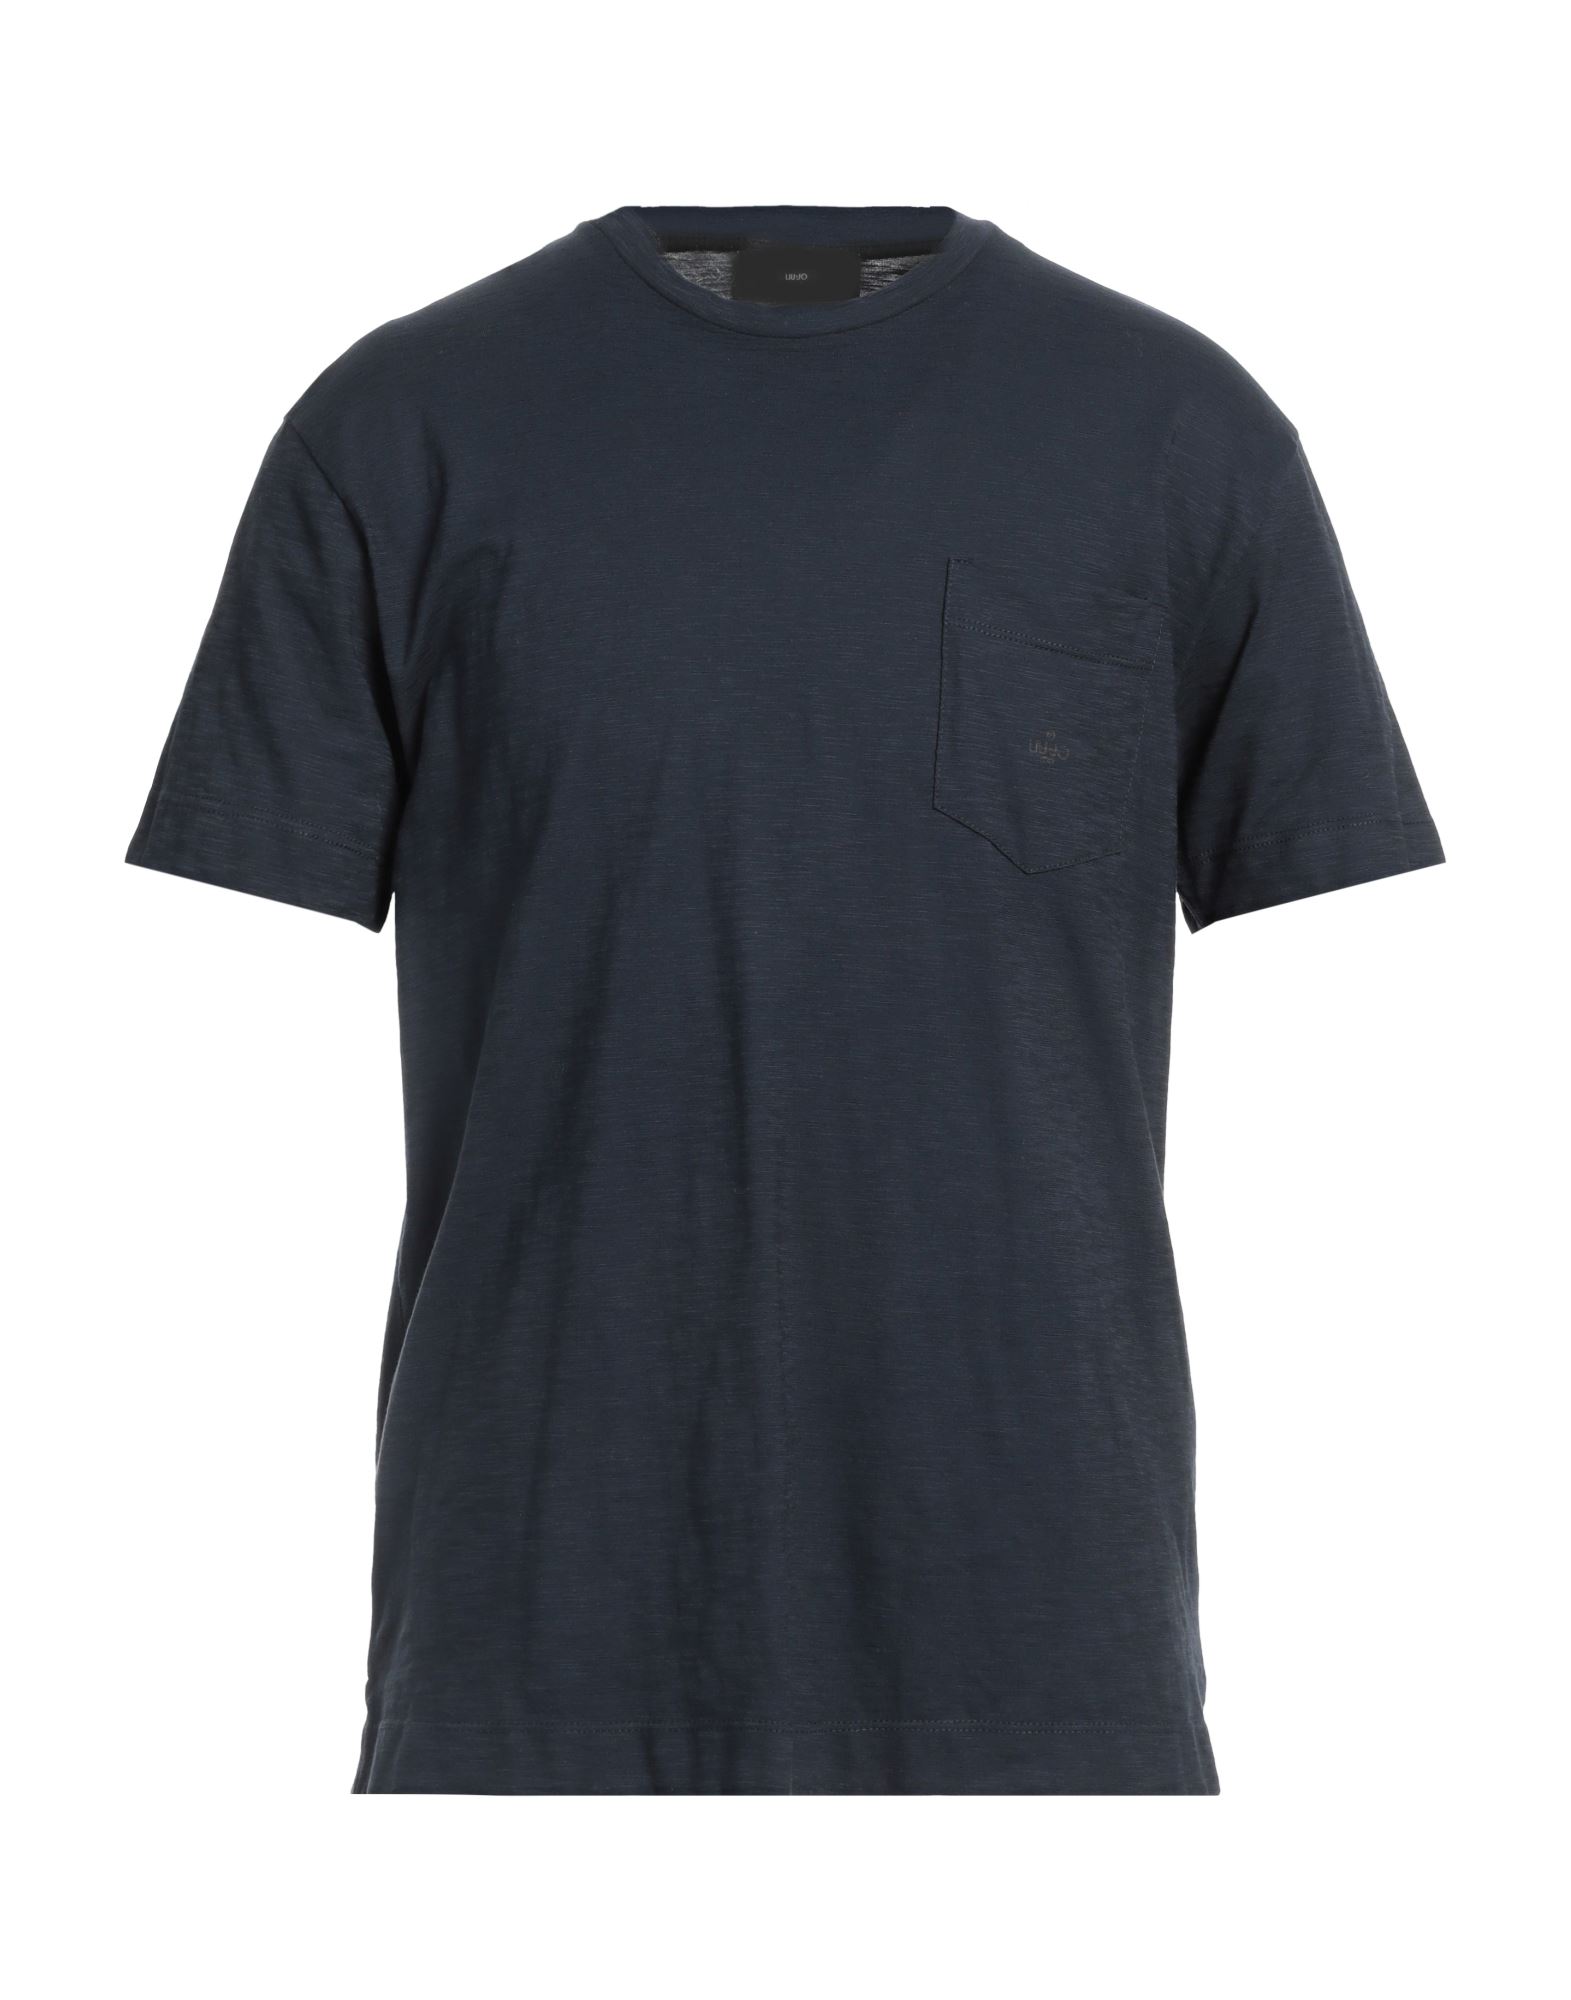 LIU •JO MAN T-shirts Herren Nachtblau von LIU •JO MAN